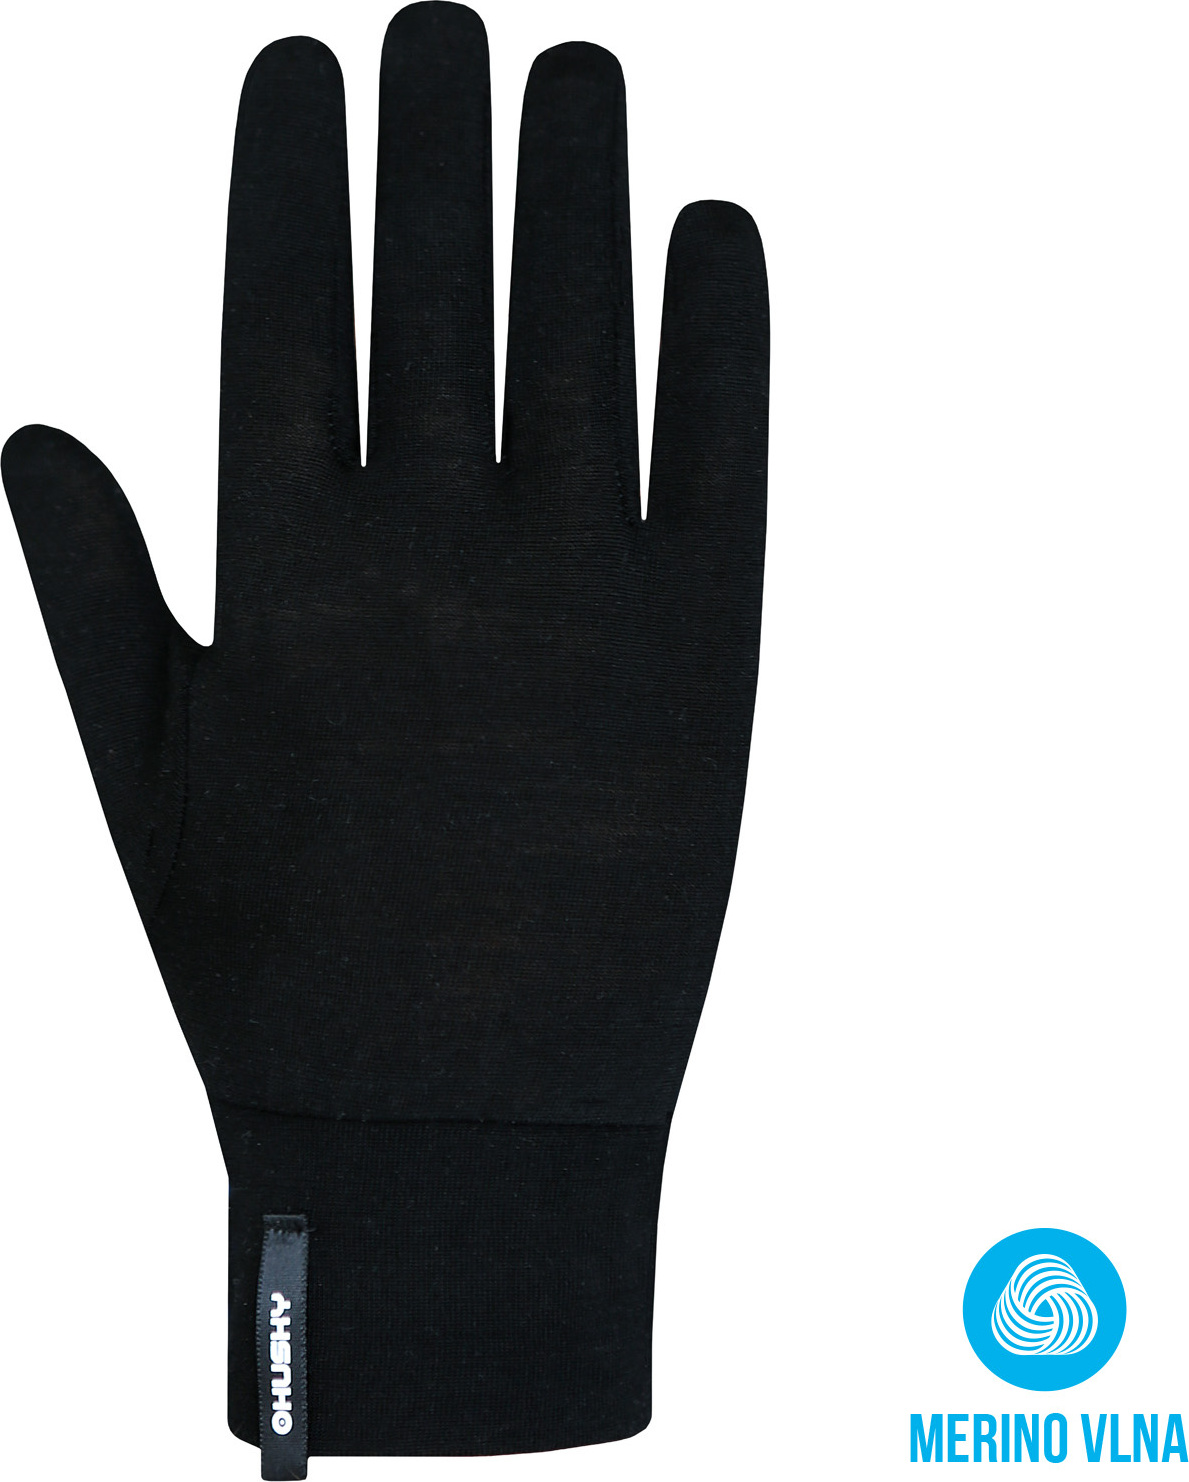 Unisex merino rukavice HUSKY Merglov černé Velikost: S